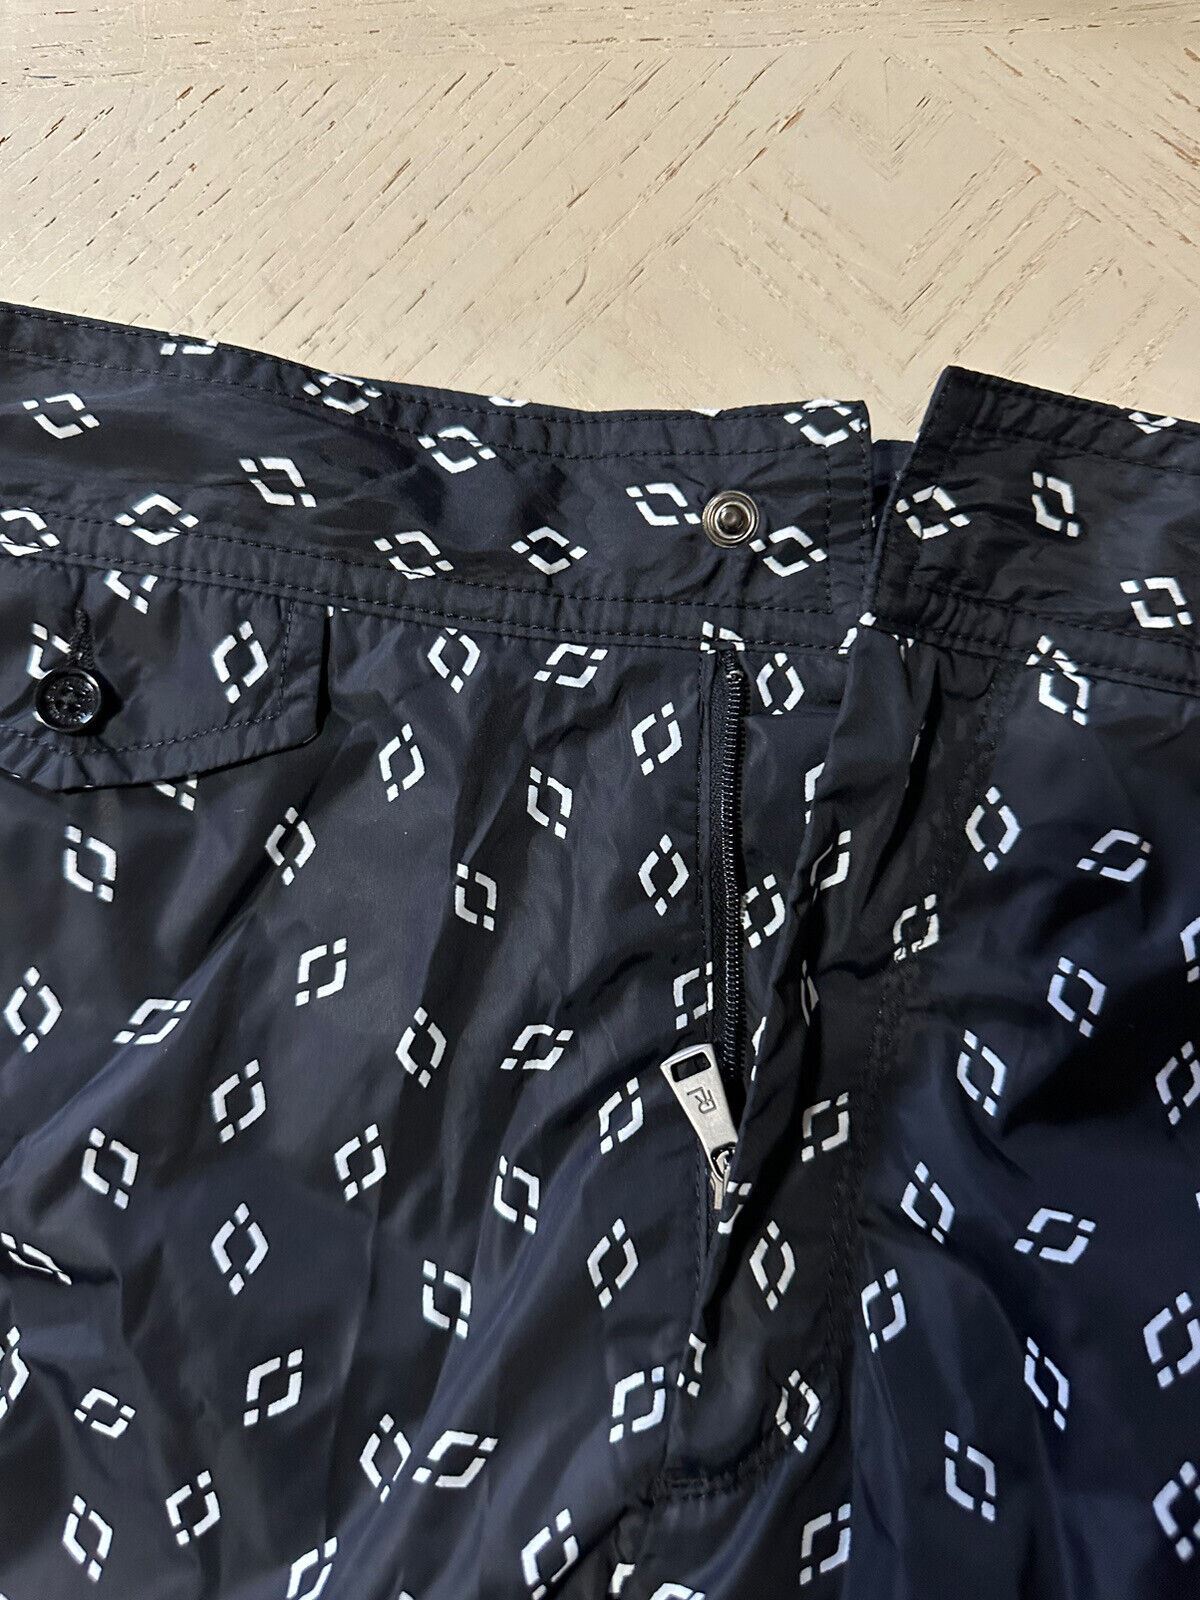 NWT $395 Мужские шорты для плавания Ralph Lauren Purple Label, черные/белые, размер XL (38 США)